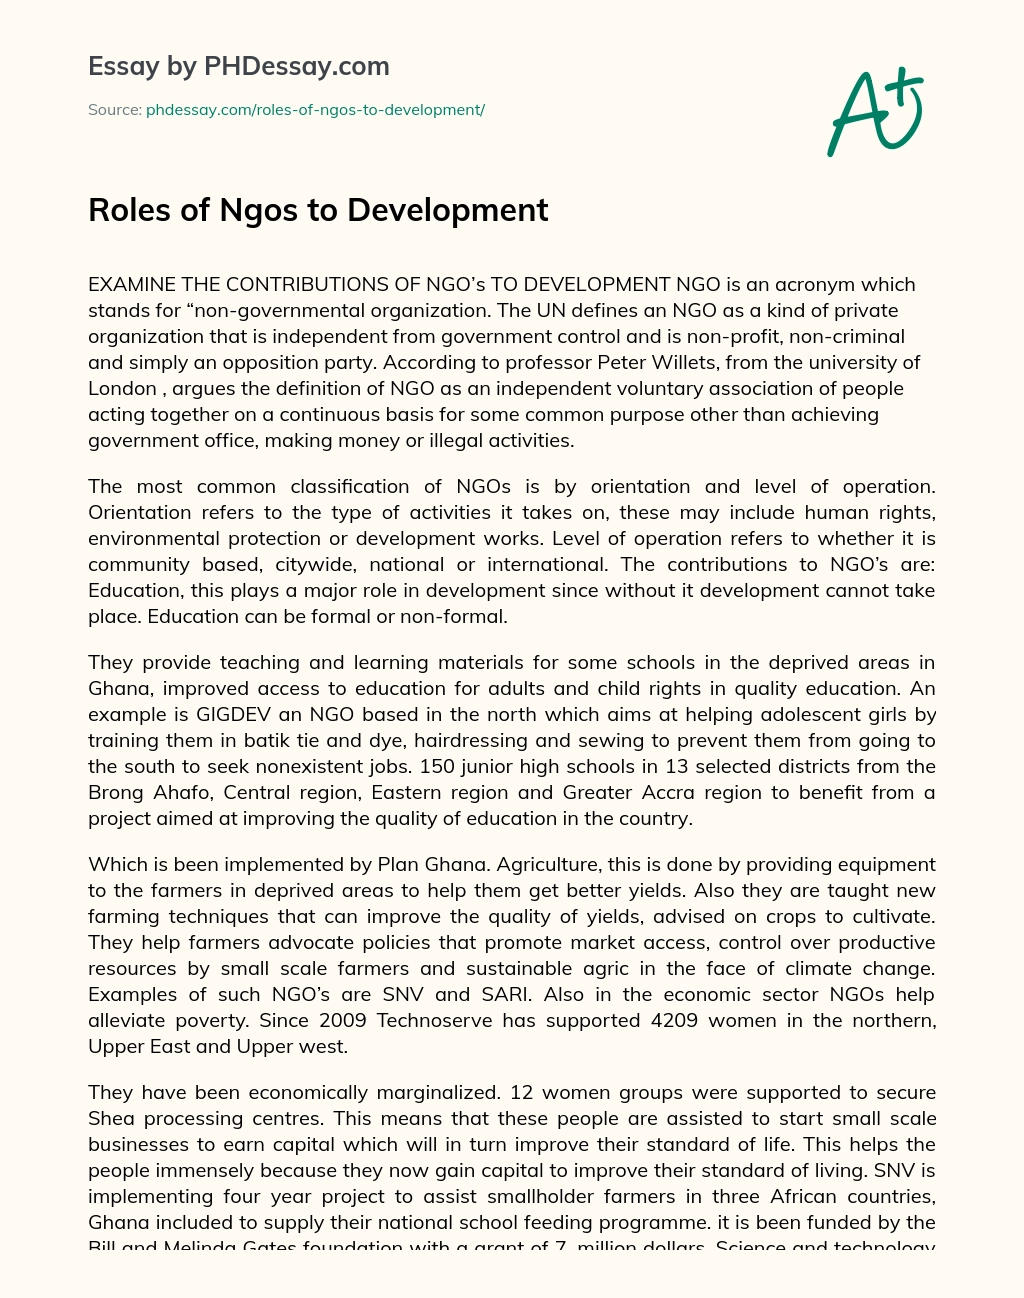 Roles of Ngos to Development essay